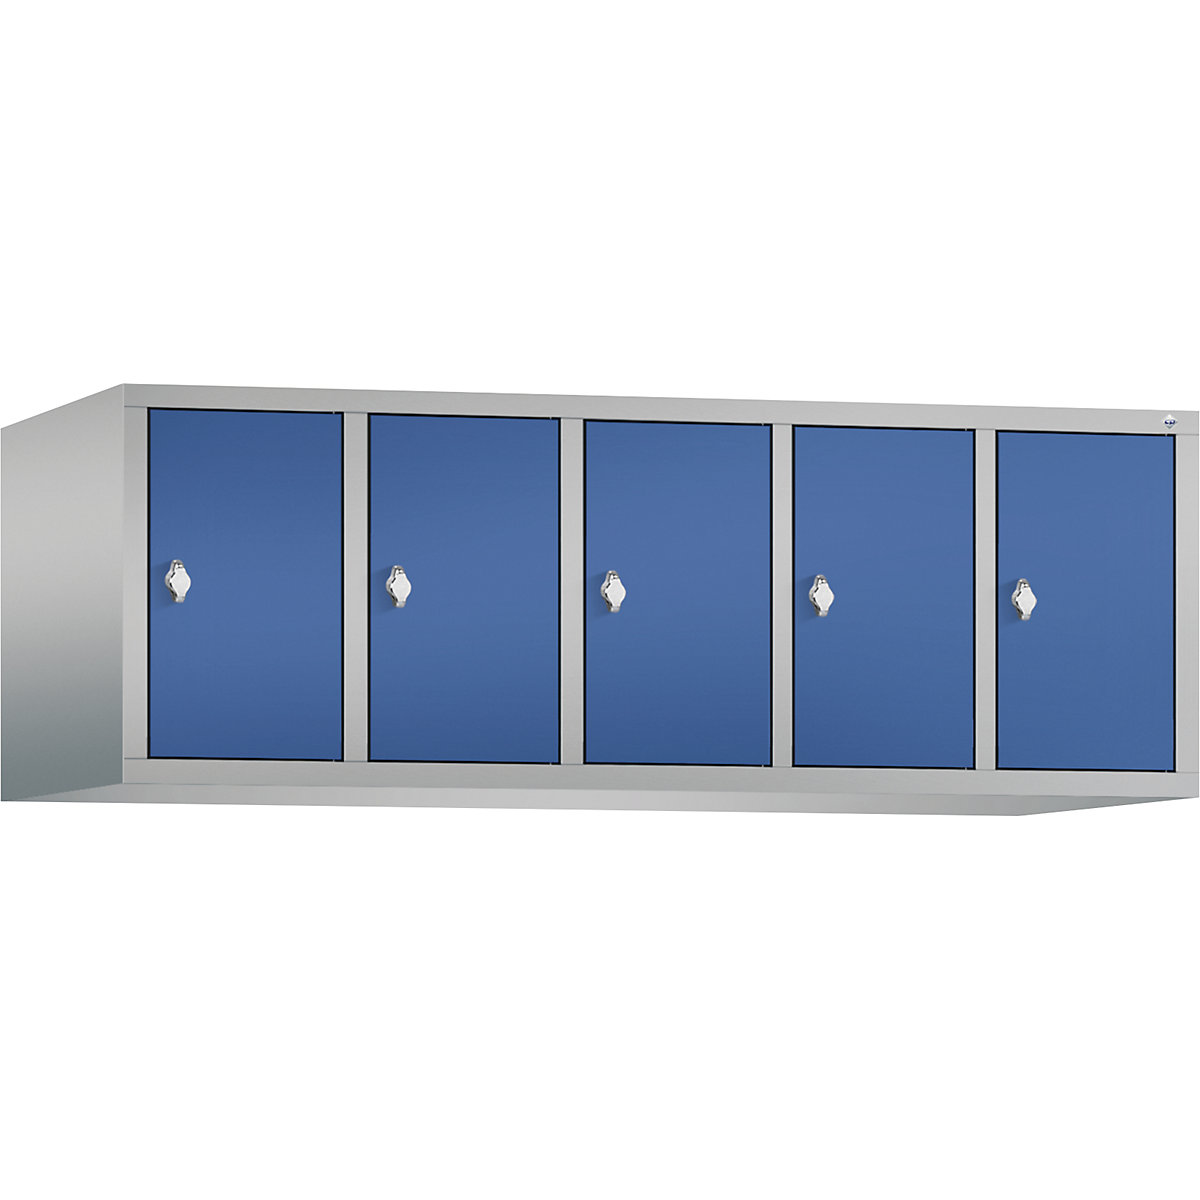 C+P – Altillo CLASSIC, 5 compartimentos, anchura de compartimento 300 mm, aluminio blanco / azul genciana